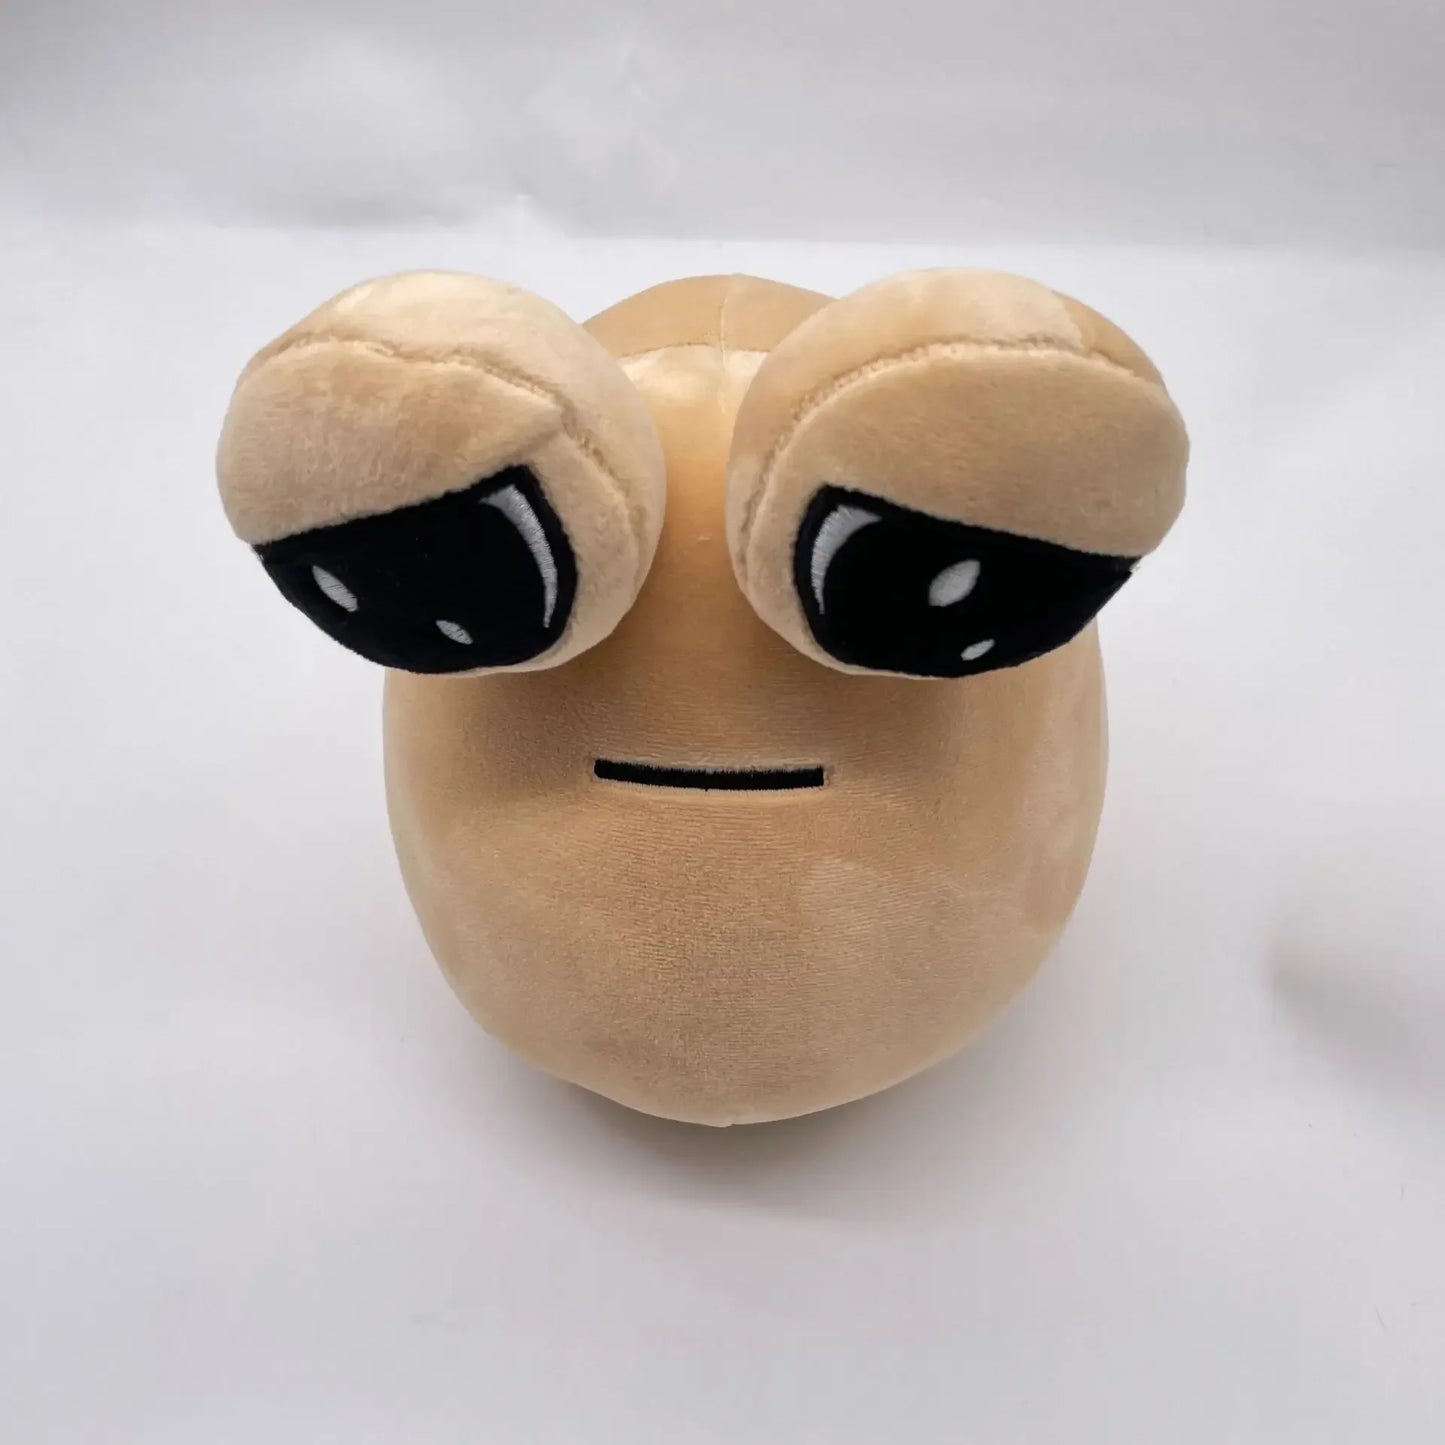 Emotion Alien Plush Toy - 22cm Interactive Pou Alien Doll